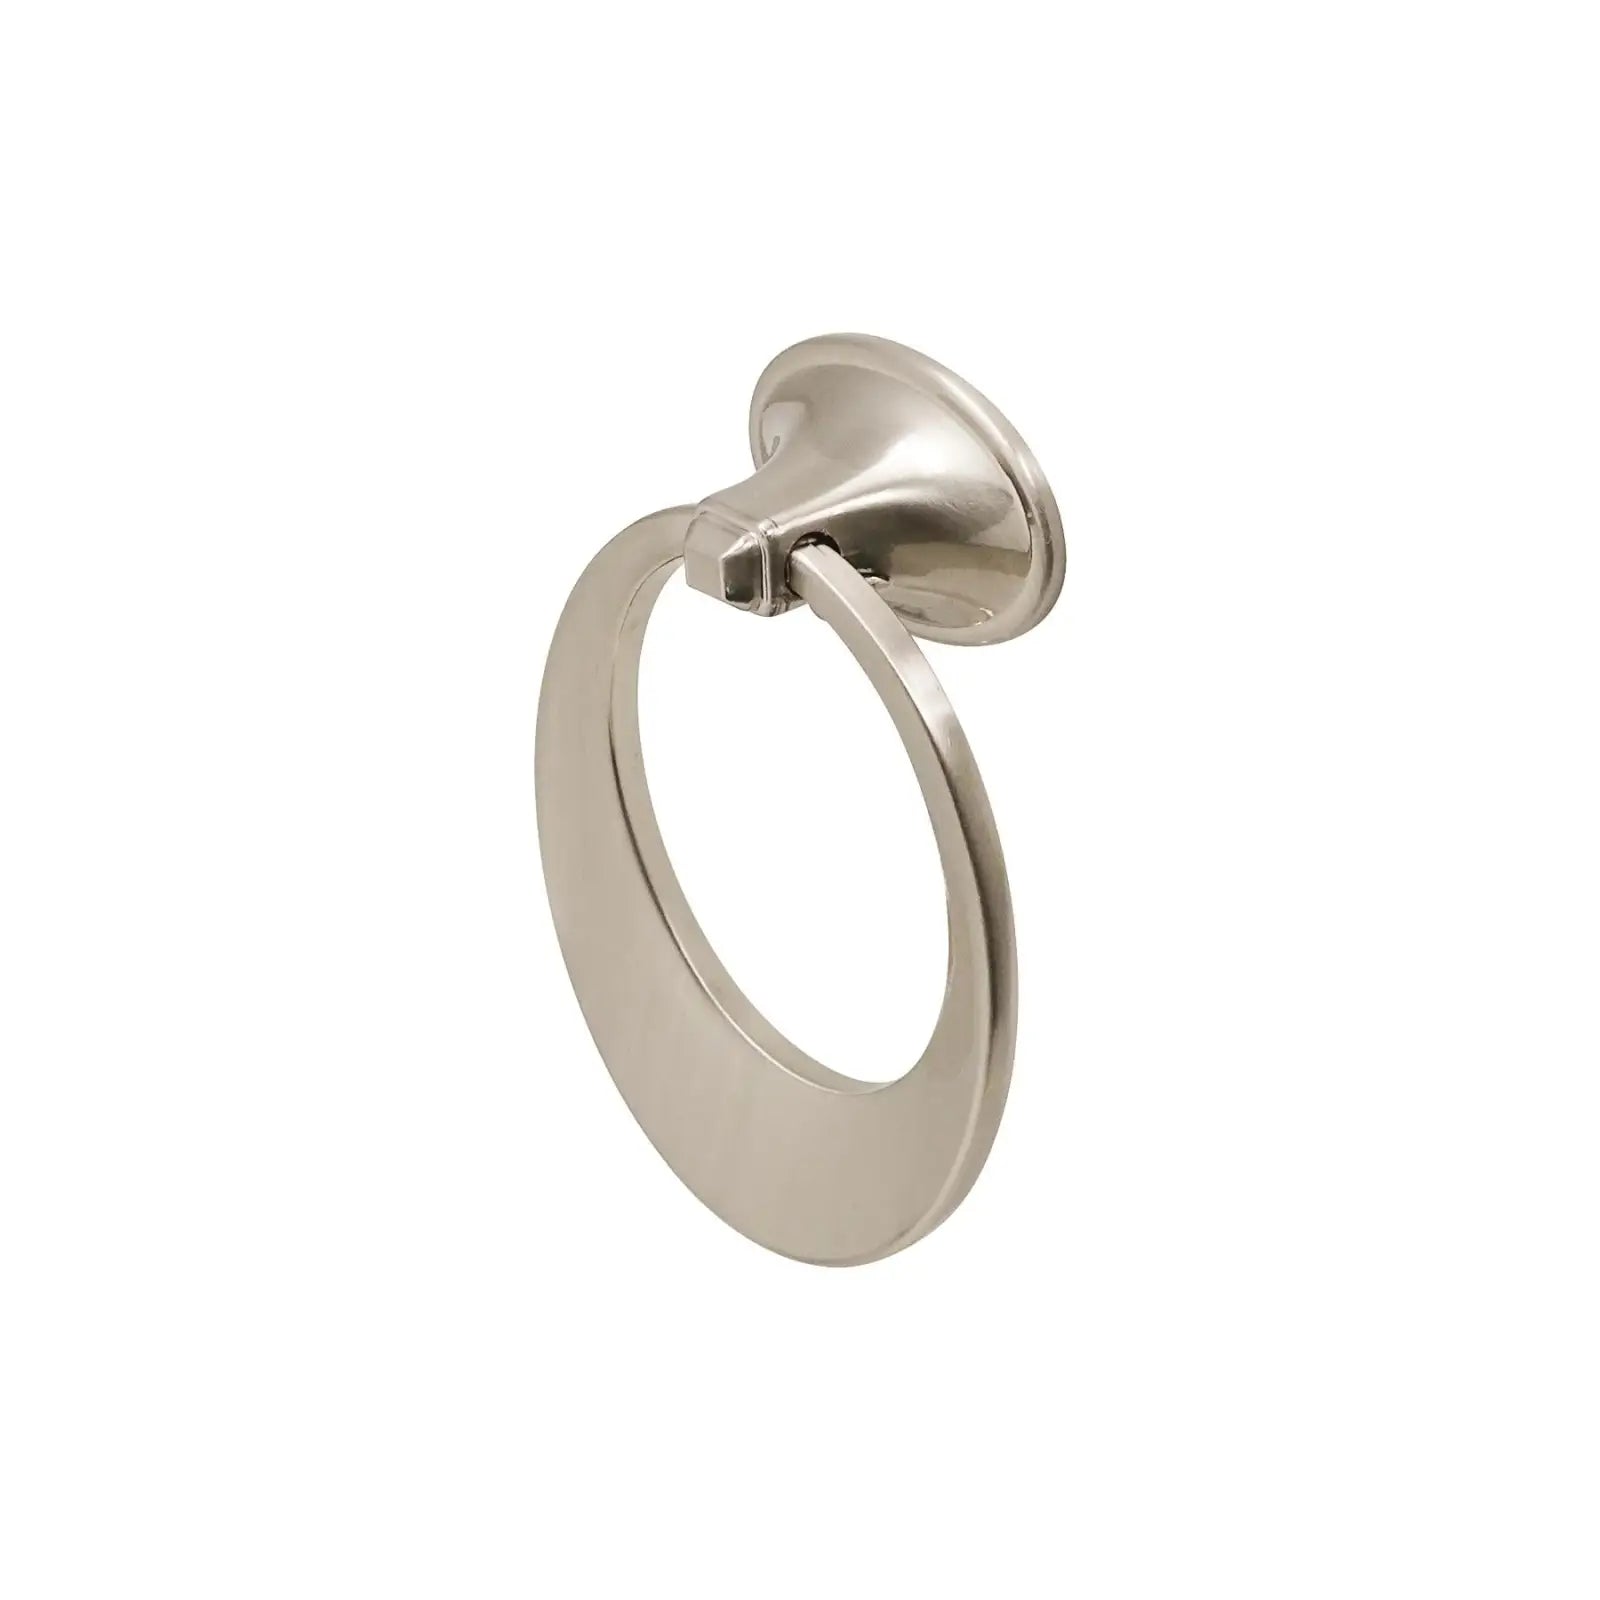 Sedona - Round Drop Ring Pull Handle - Satin Nickel - Decor And Decor